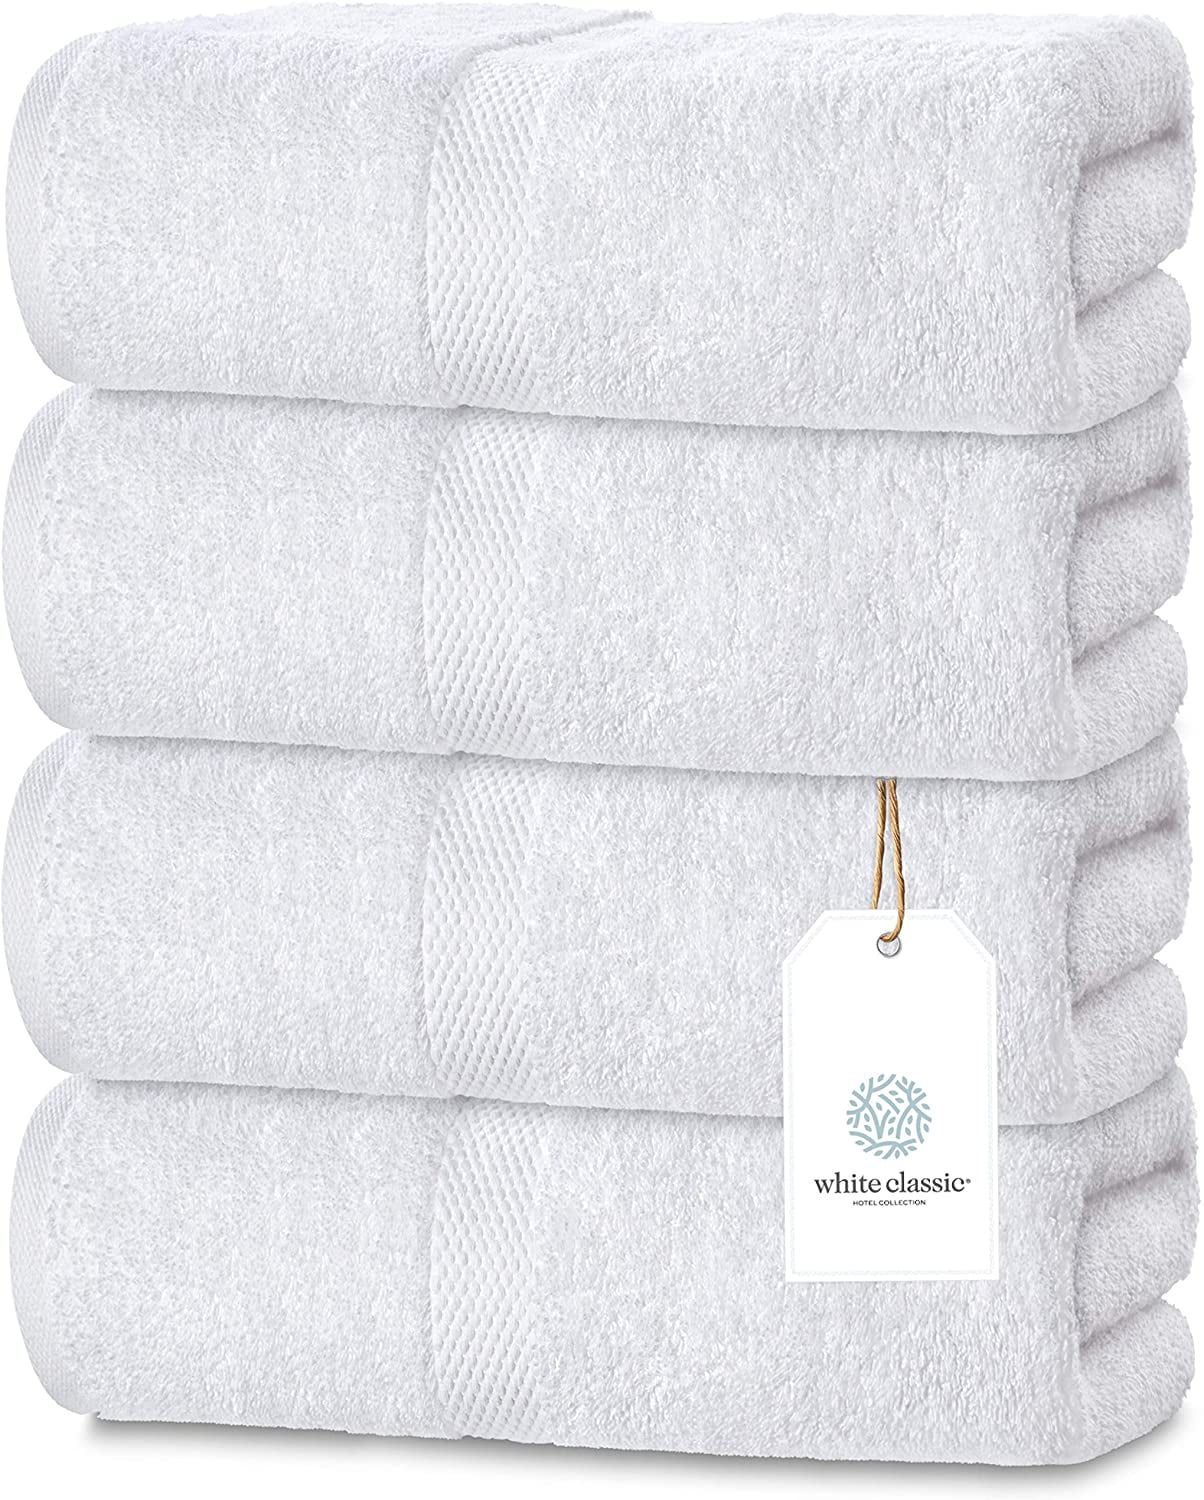 6 new cotton 24x50 white hotel platinum bath towels hotel spa resort irg** 